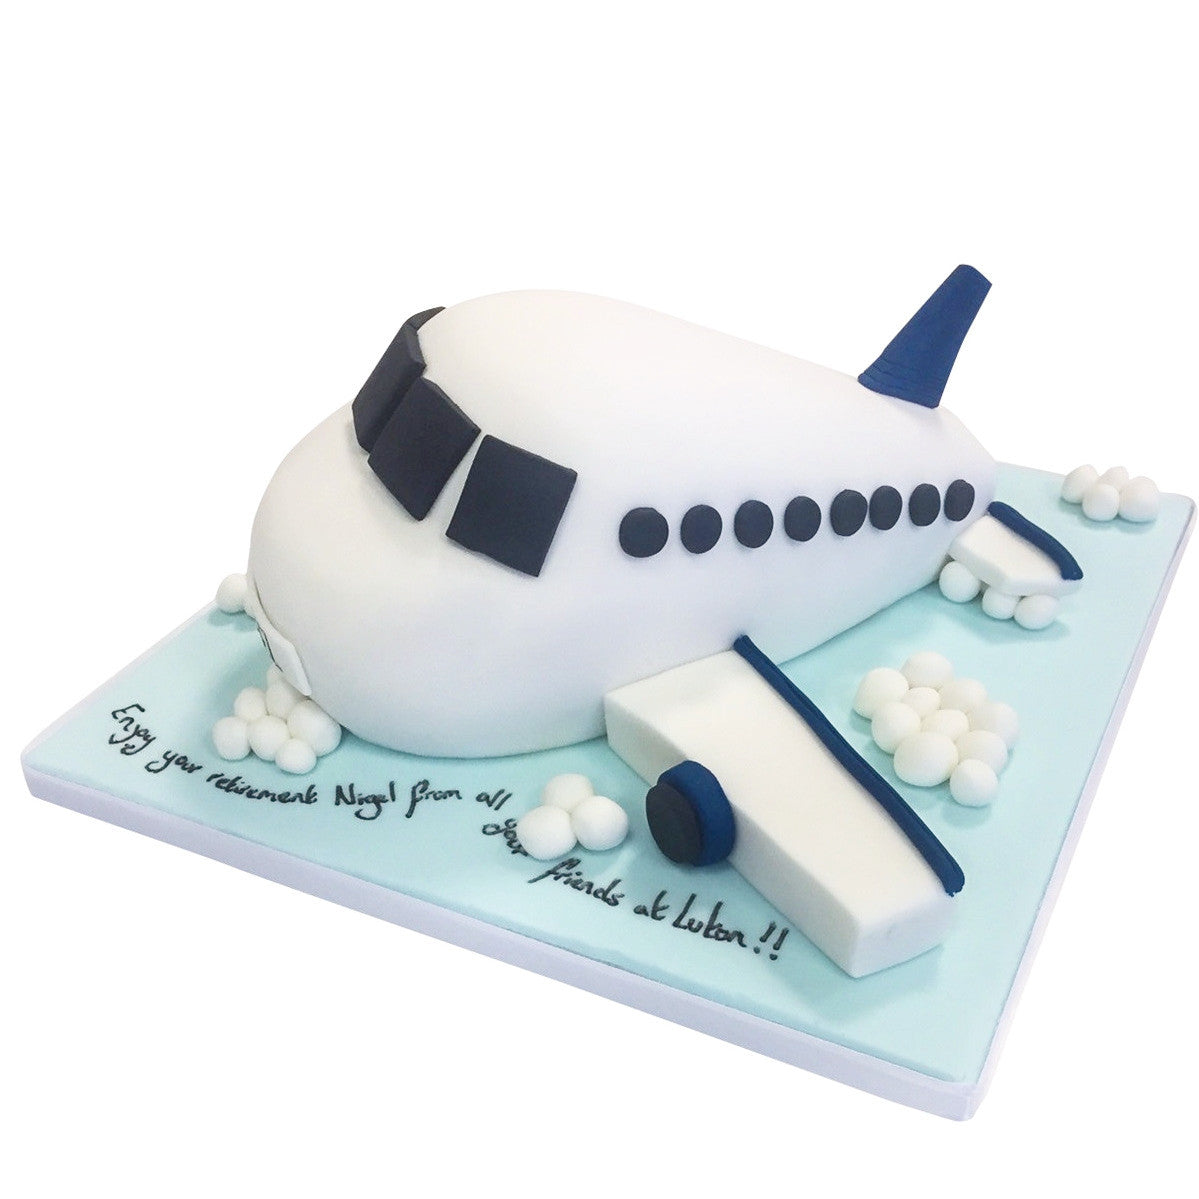 OGGYS CAKES - Remote control plane birthday cake | Facebook